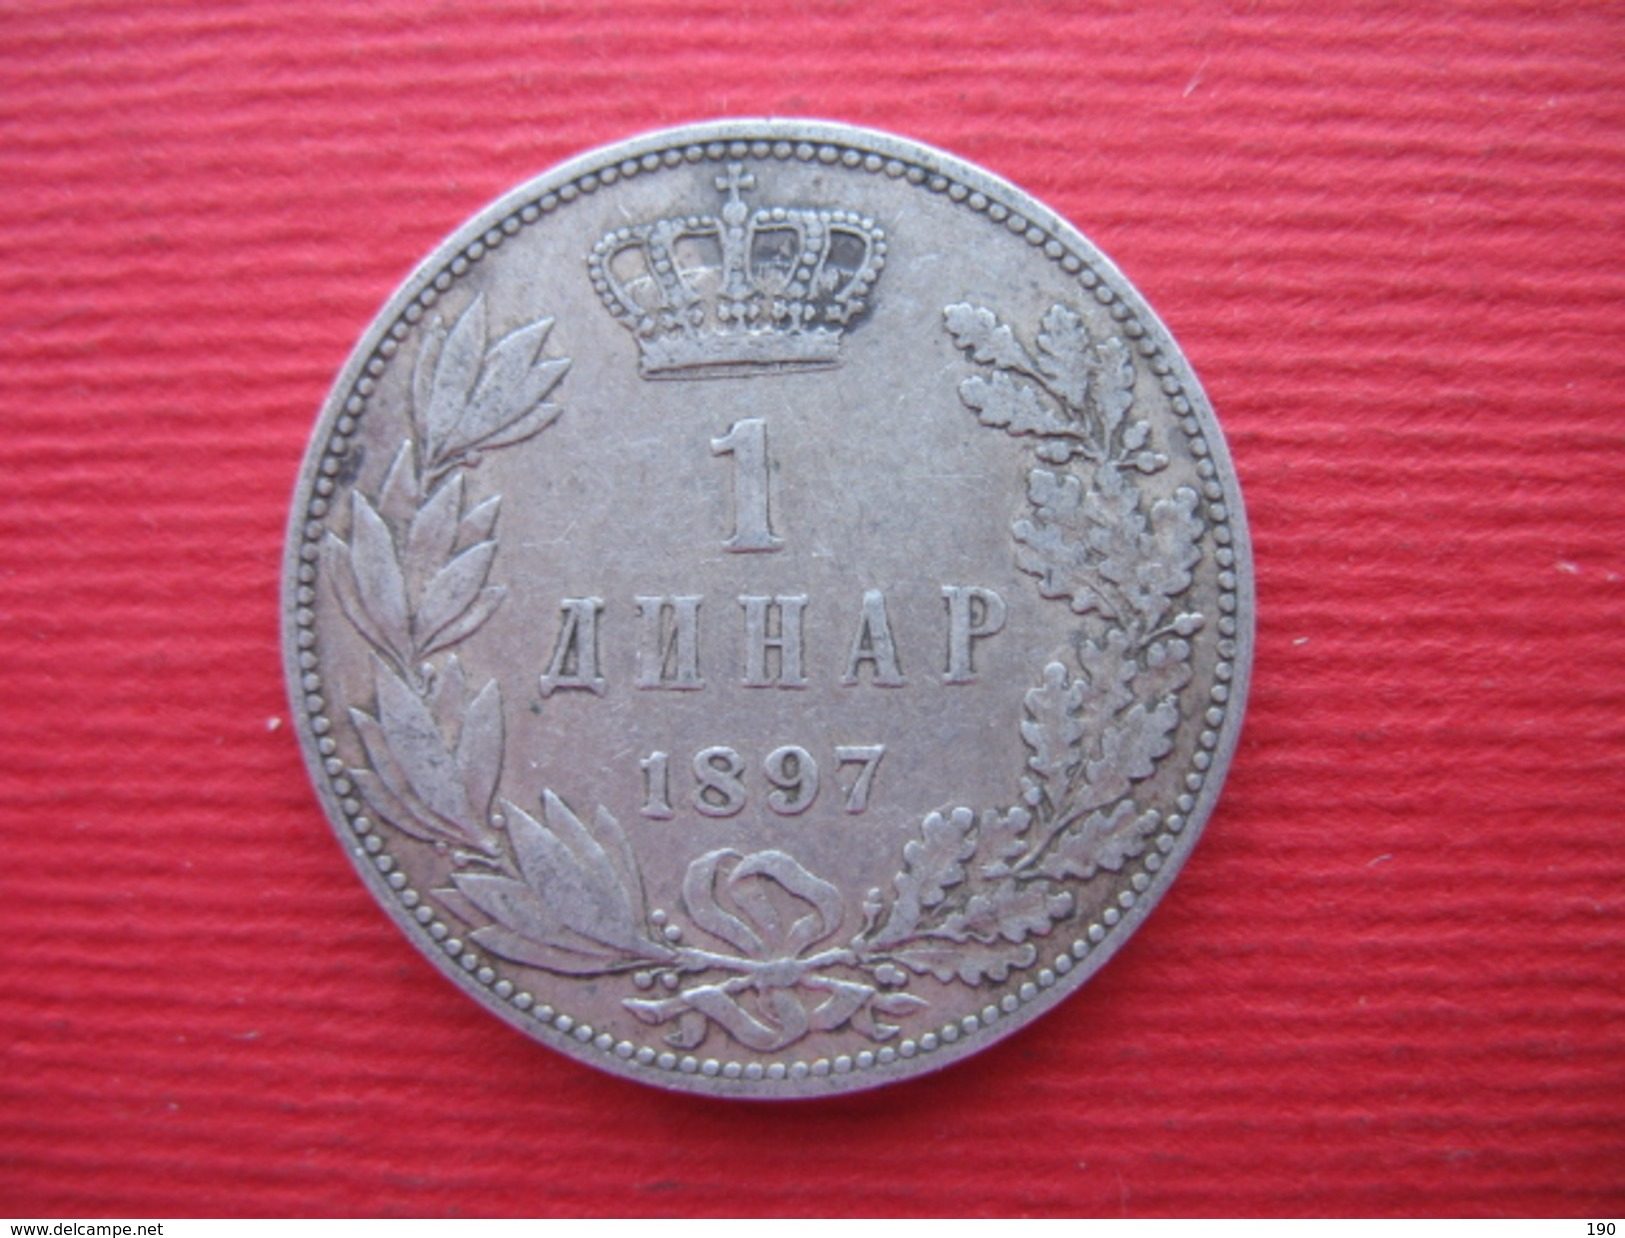 1 DINAR 1897 SILVER - Serbia